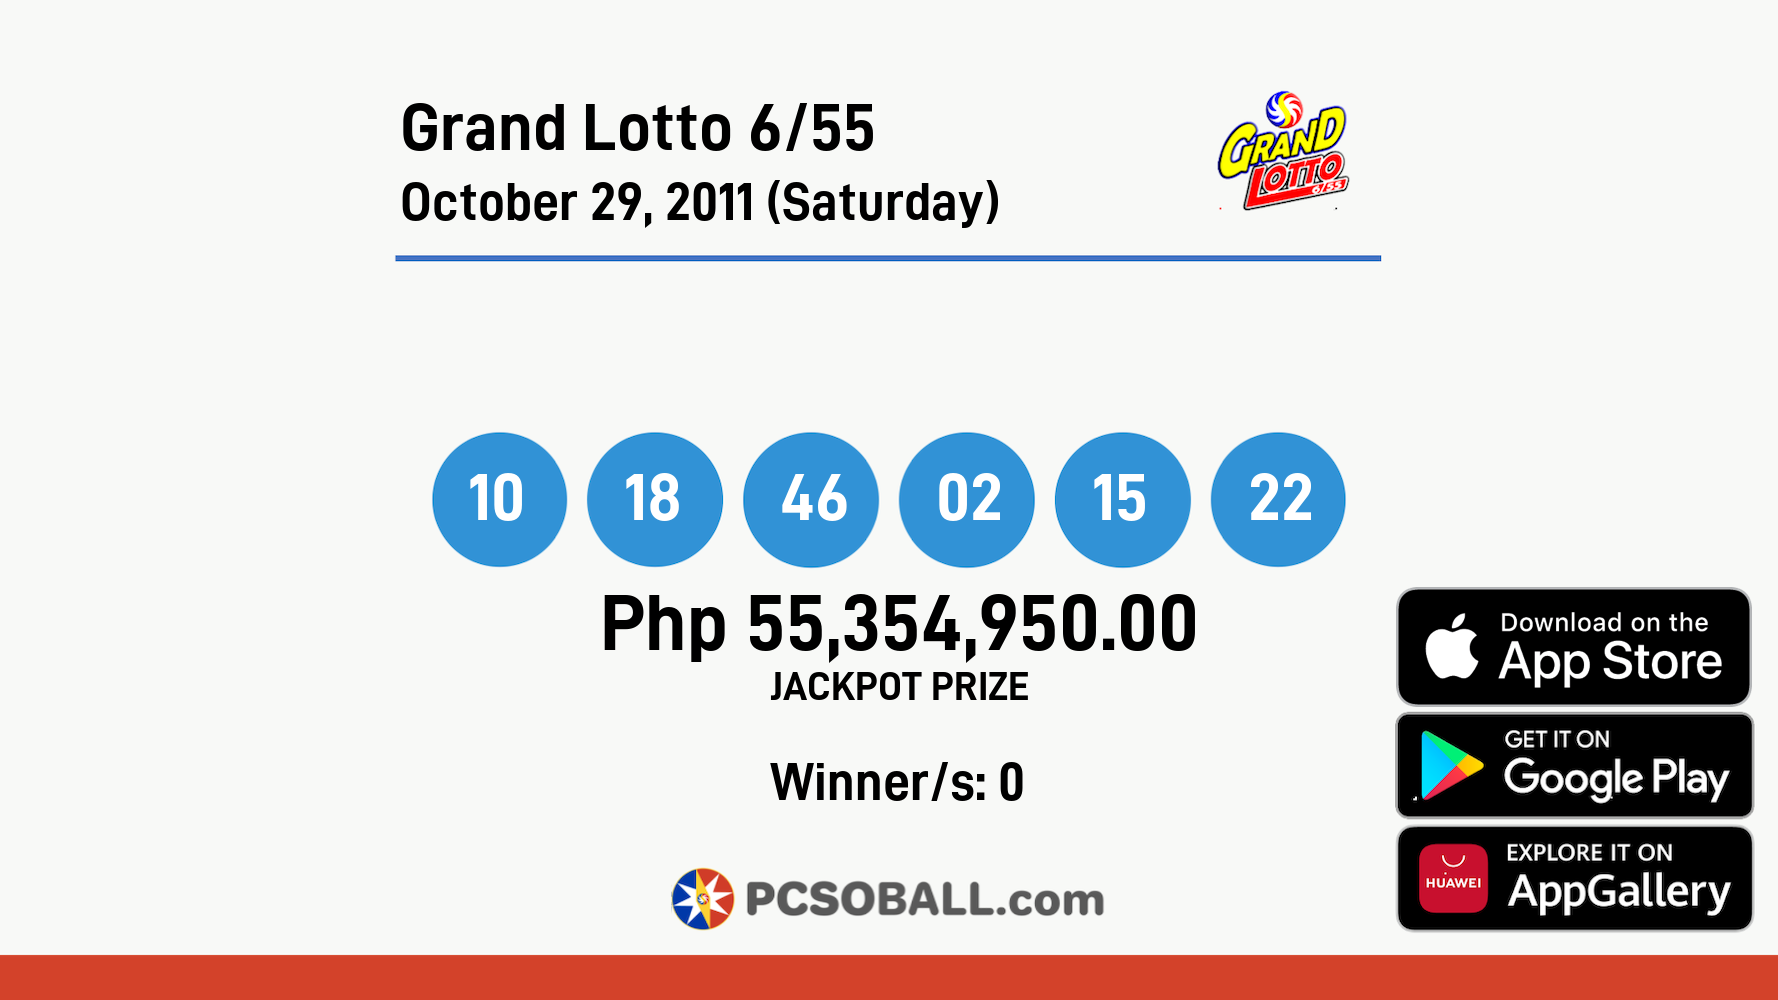 Grand Lotto 6/55 October 29, 2011 (Saturday) Result